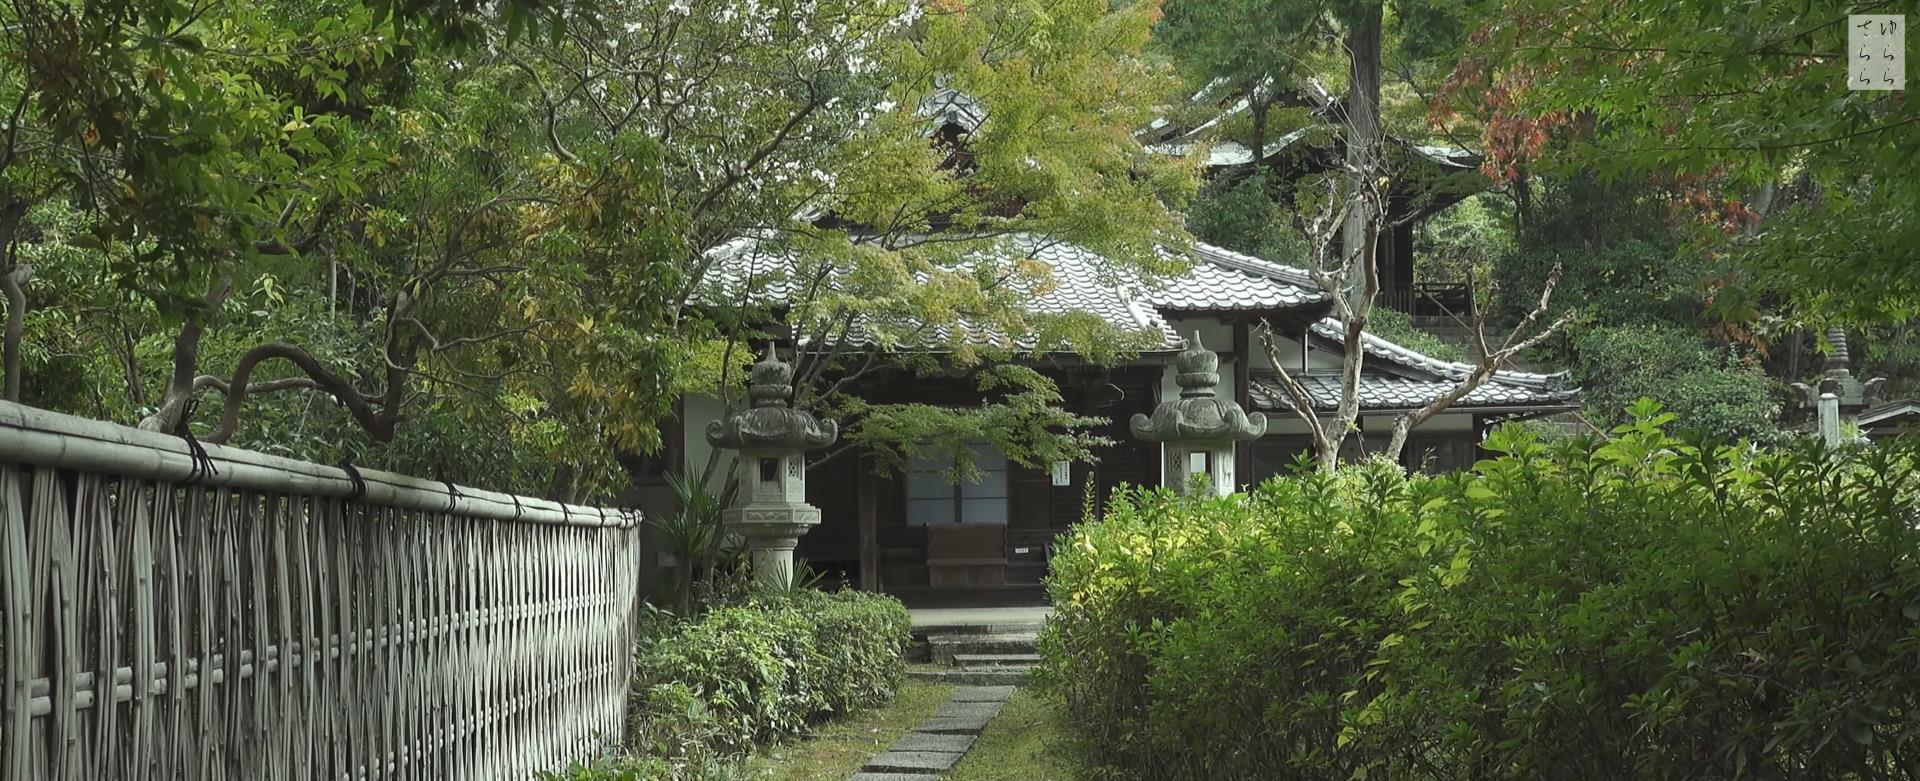 Wabi-Sabi-侘寂庭院,侘寂庭院,京都,侘寂設計,來迎院,RAIGO-IN,侘寂視頻下載,日式侘寂庭院